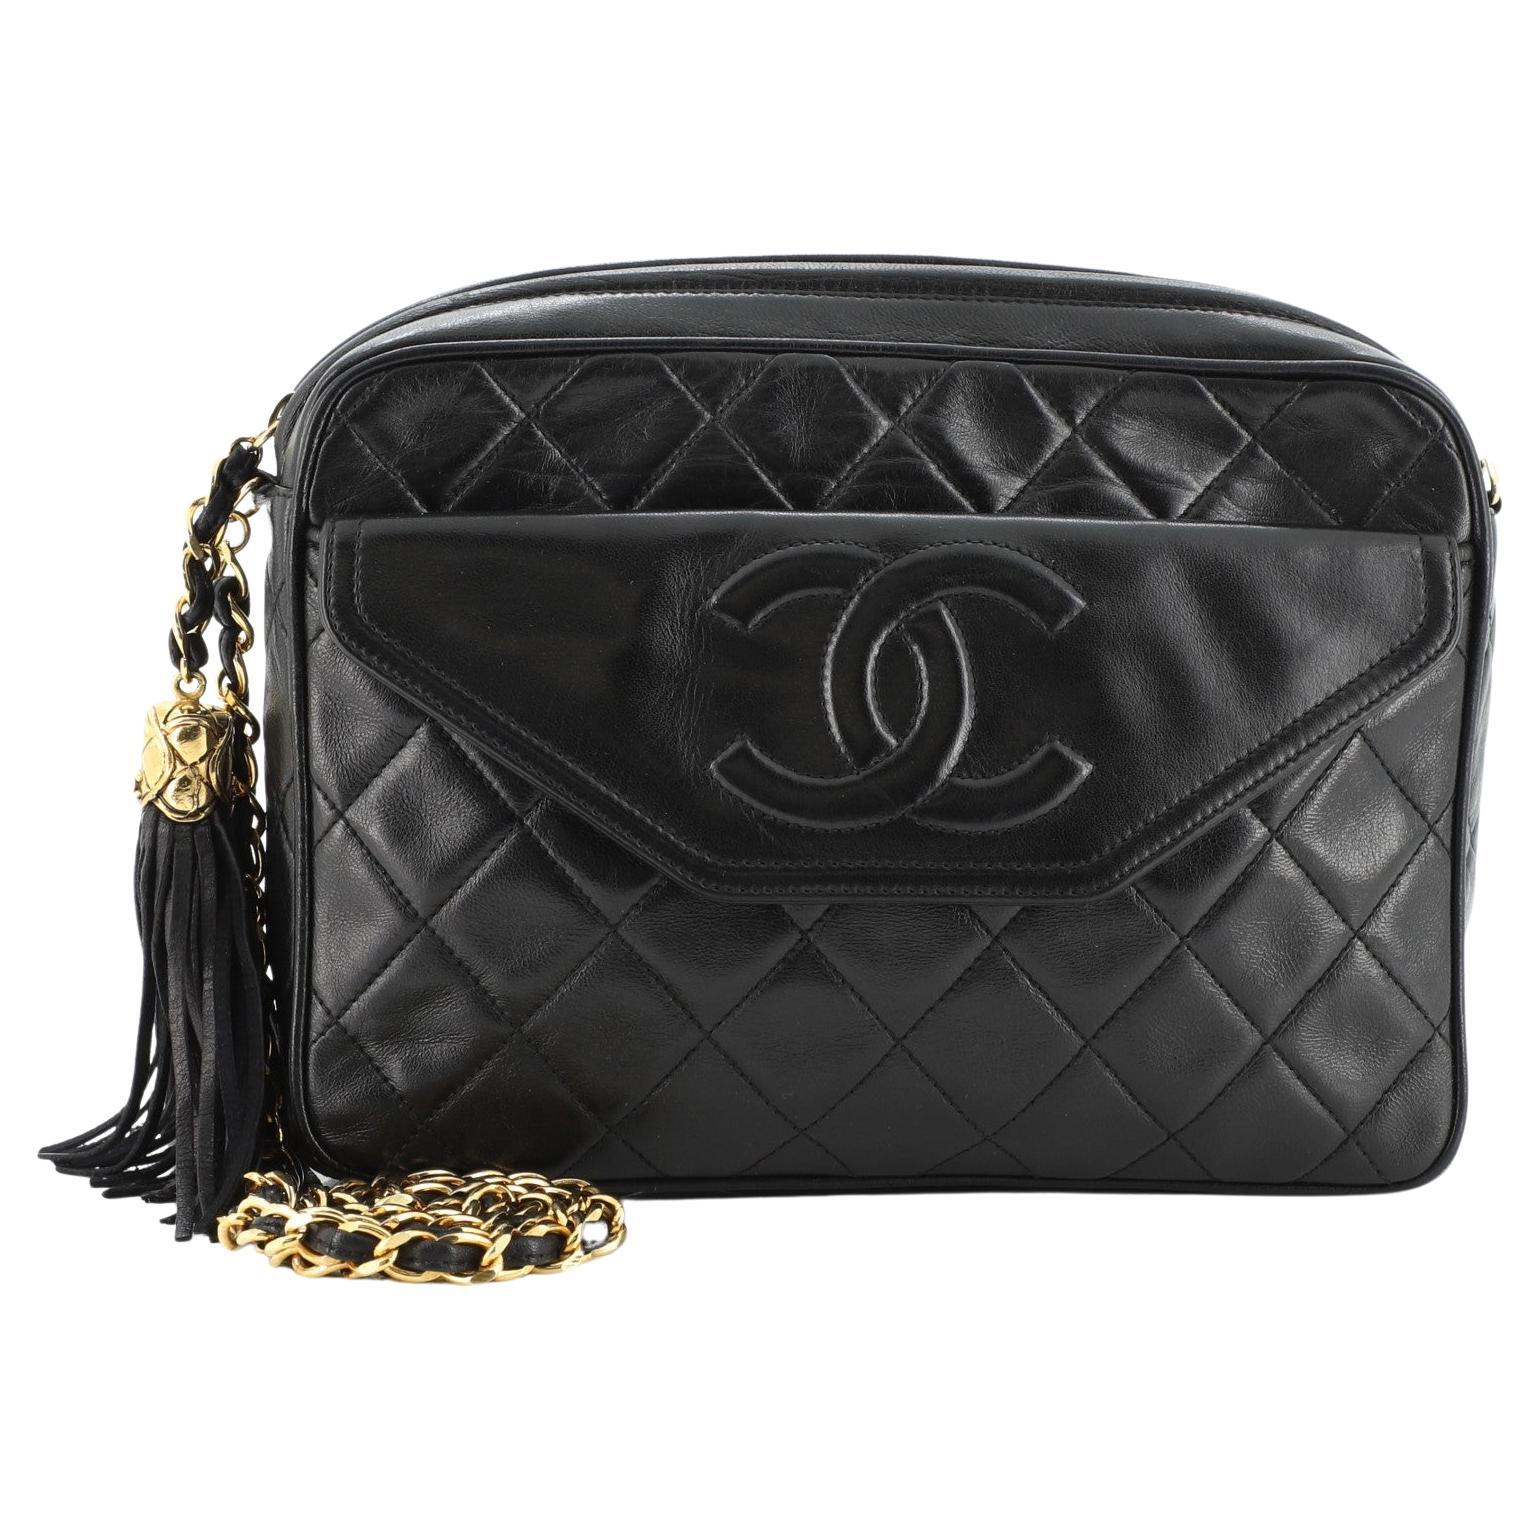 A Chanel Suede Shoulder Bag #9395451